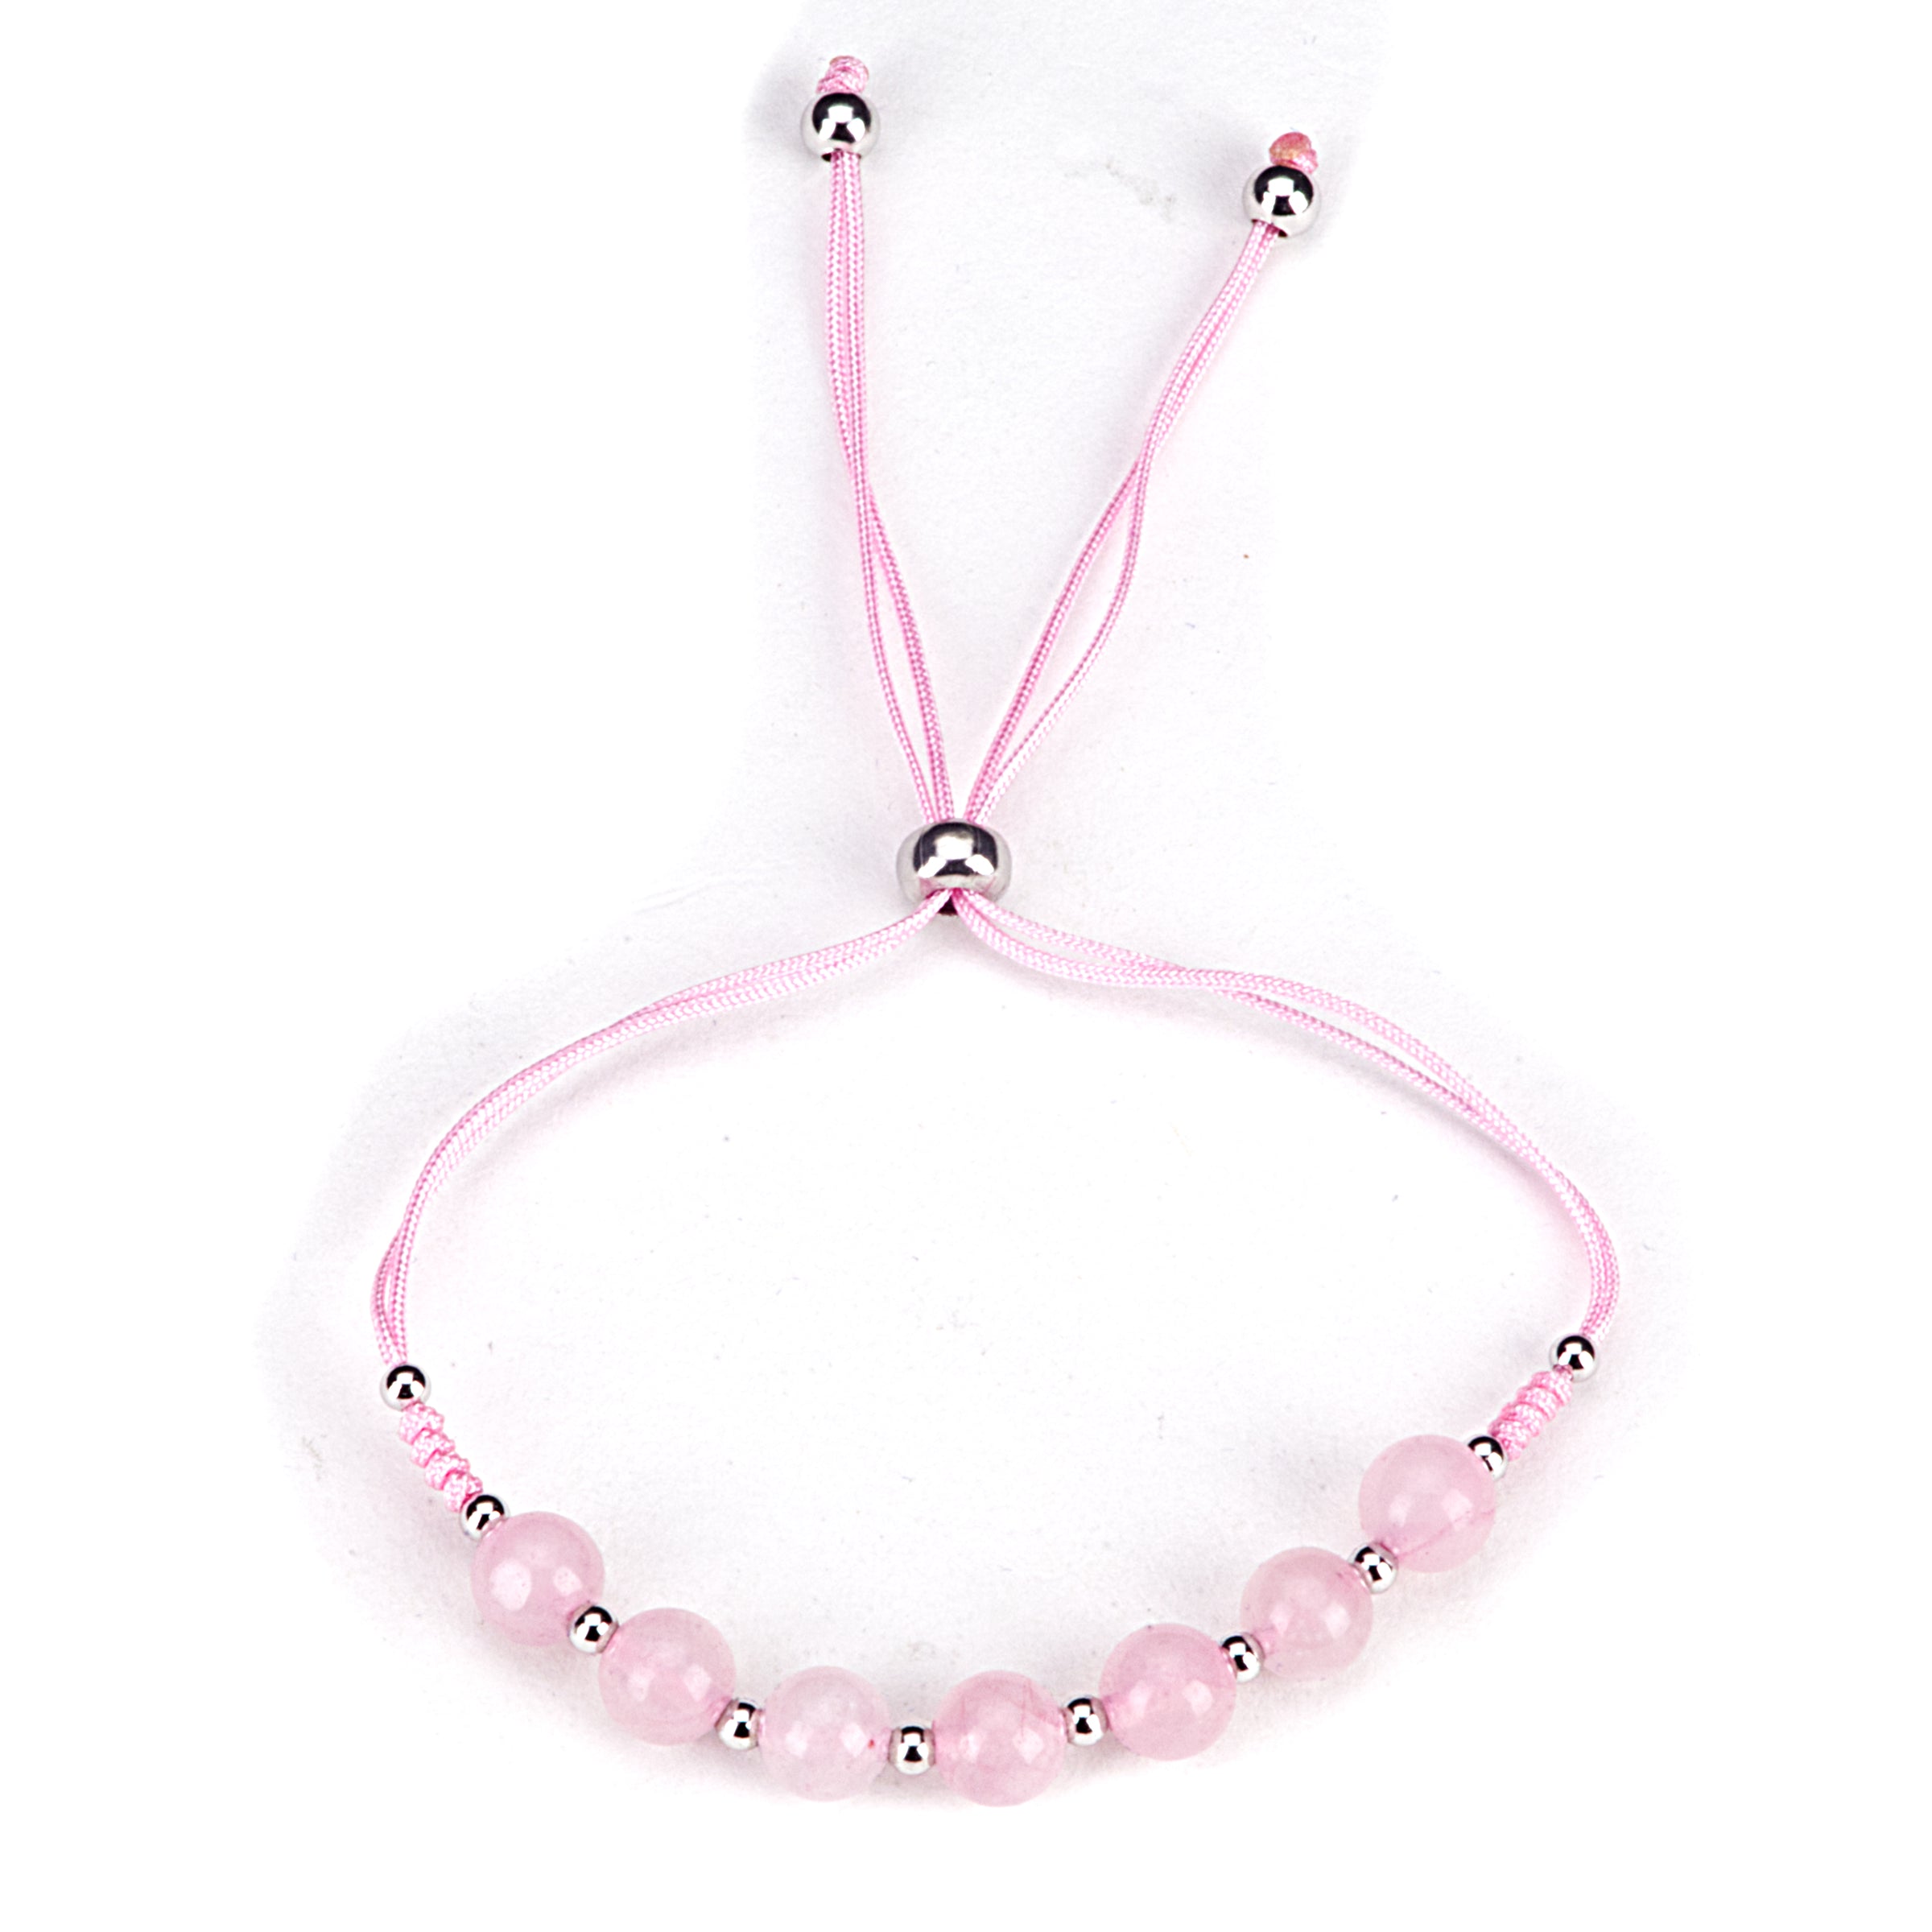 Gemstone Bracelet | Adjustable Size Nylon Cord | 6mm Beads with sterling silver Spacers (Rose Quartz)